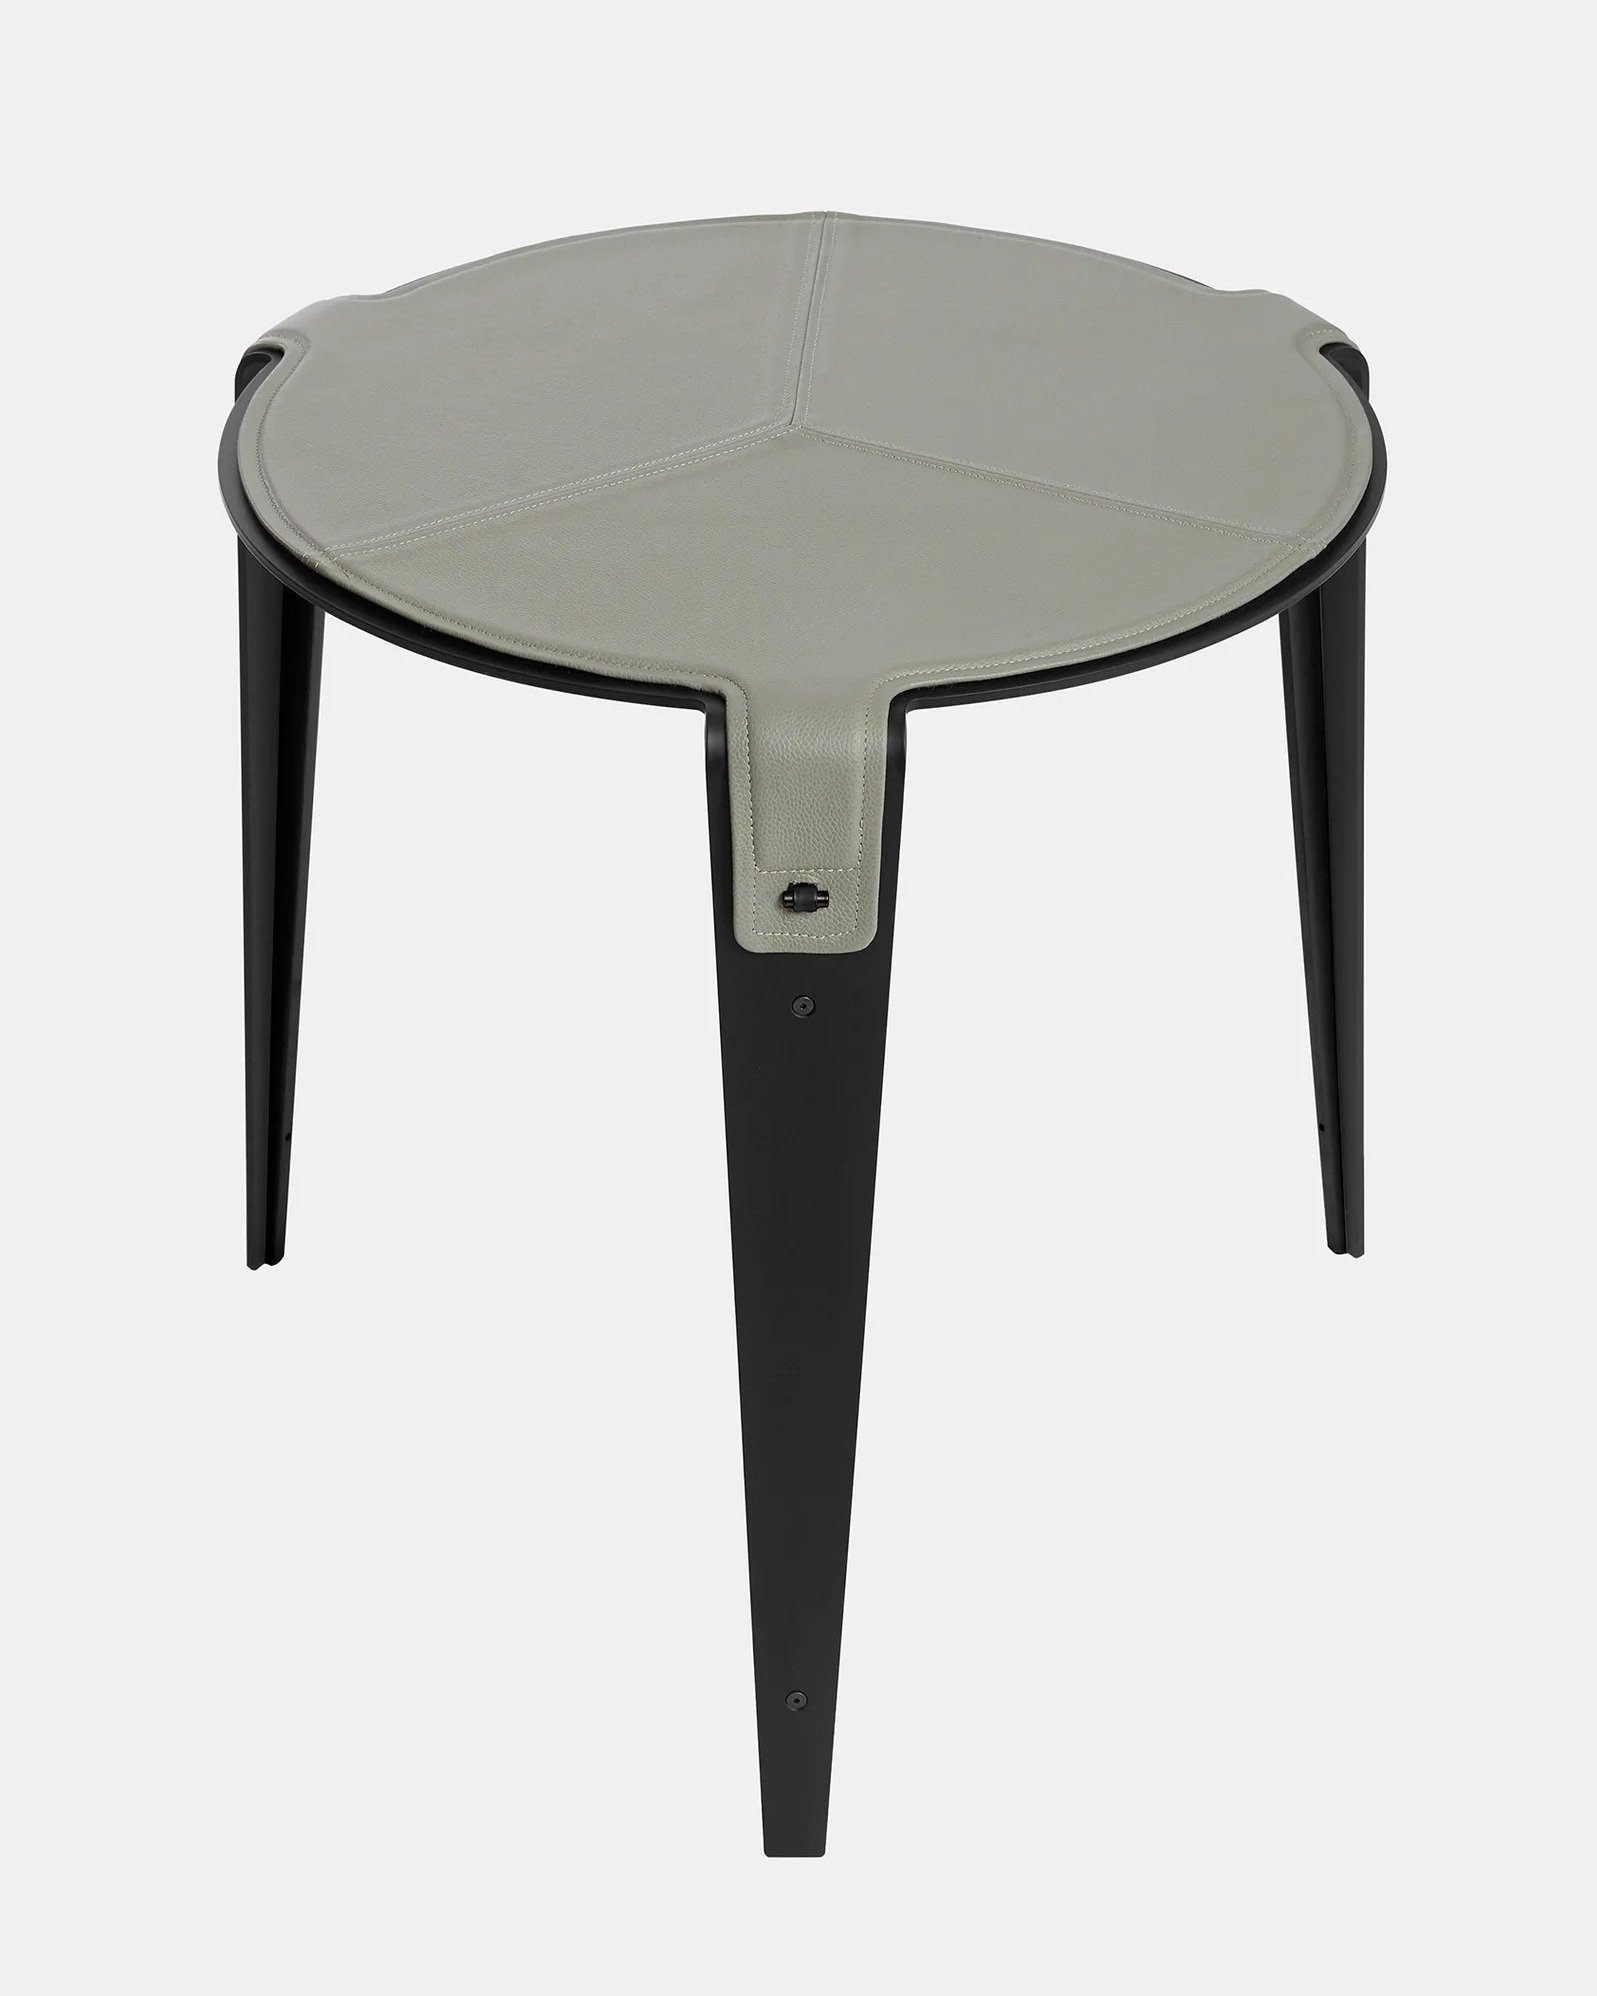 BARDOT SIDE TABLE - BLACK STEEL + SLATE GRAY